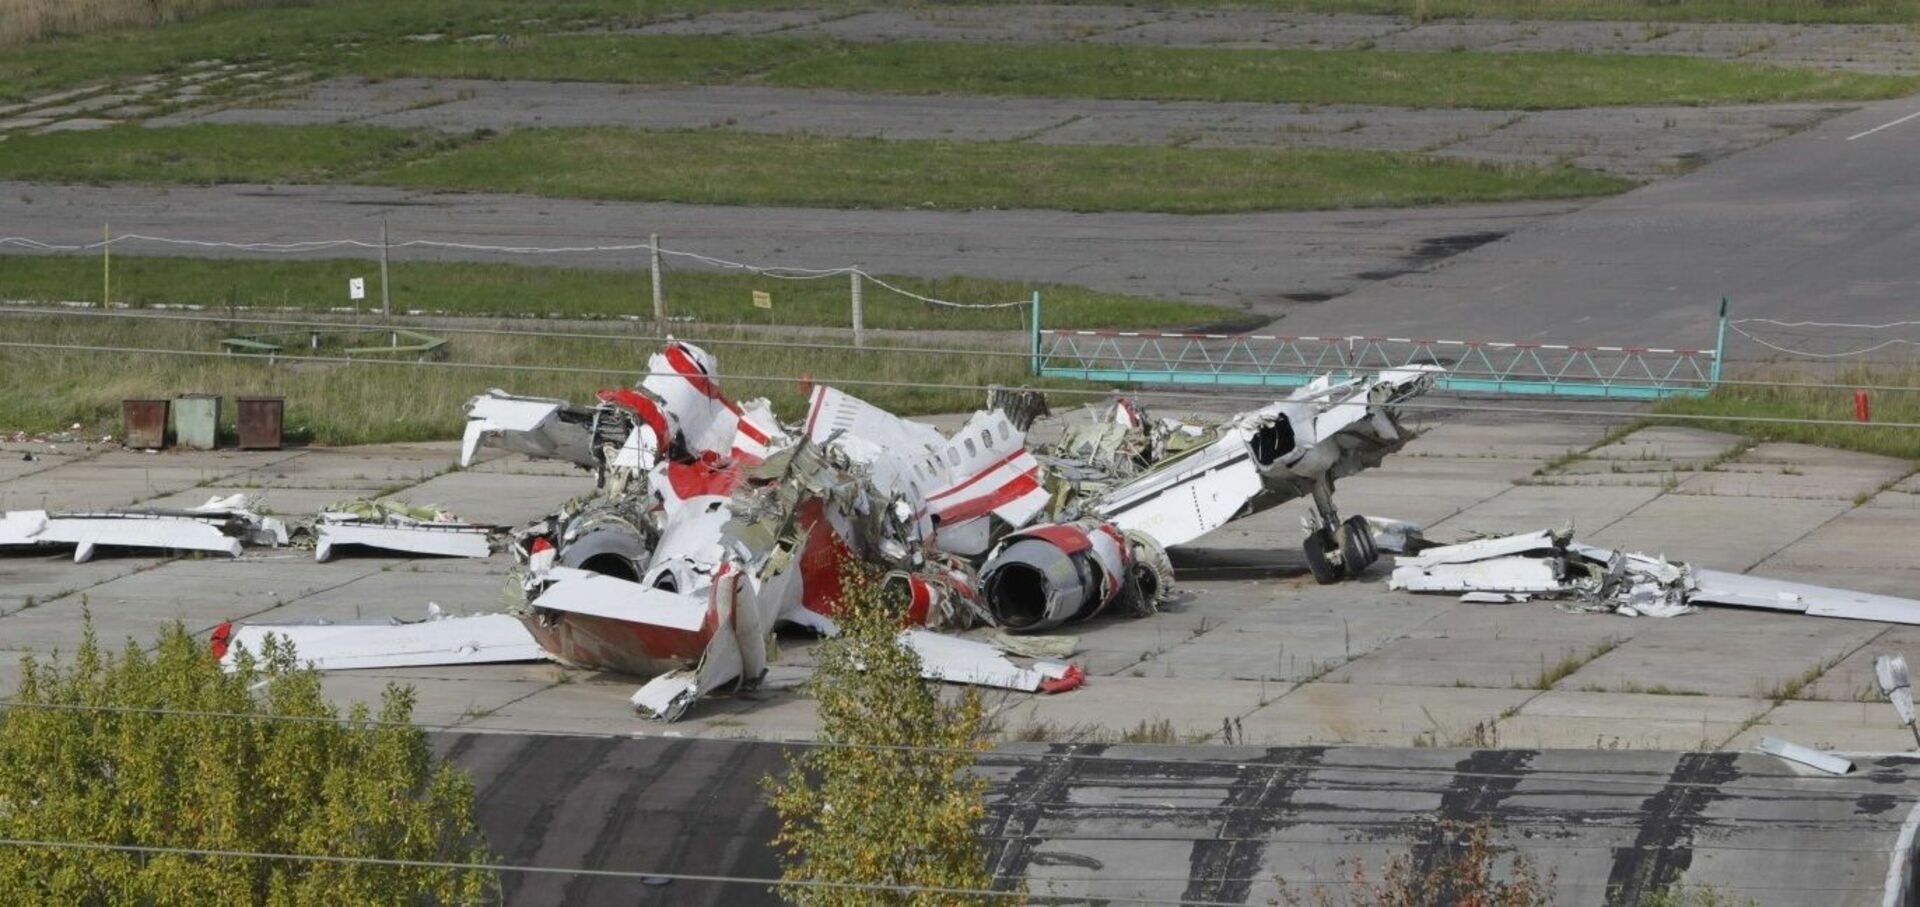 Авиакатастрофа 2010. Катастрофа ту-154 в Смоленске. Катастрофа под Смоленском ту-154. Катастрофа ту-154 в Смоленске 2010.